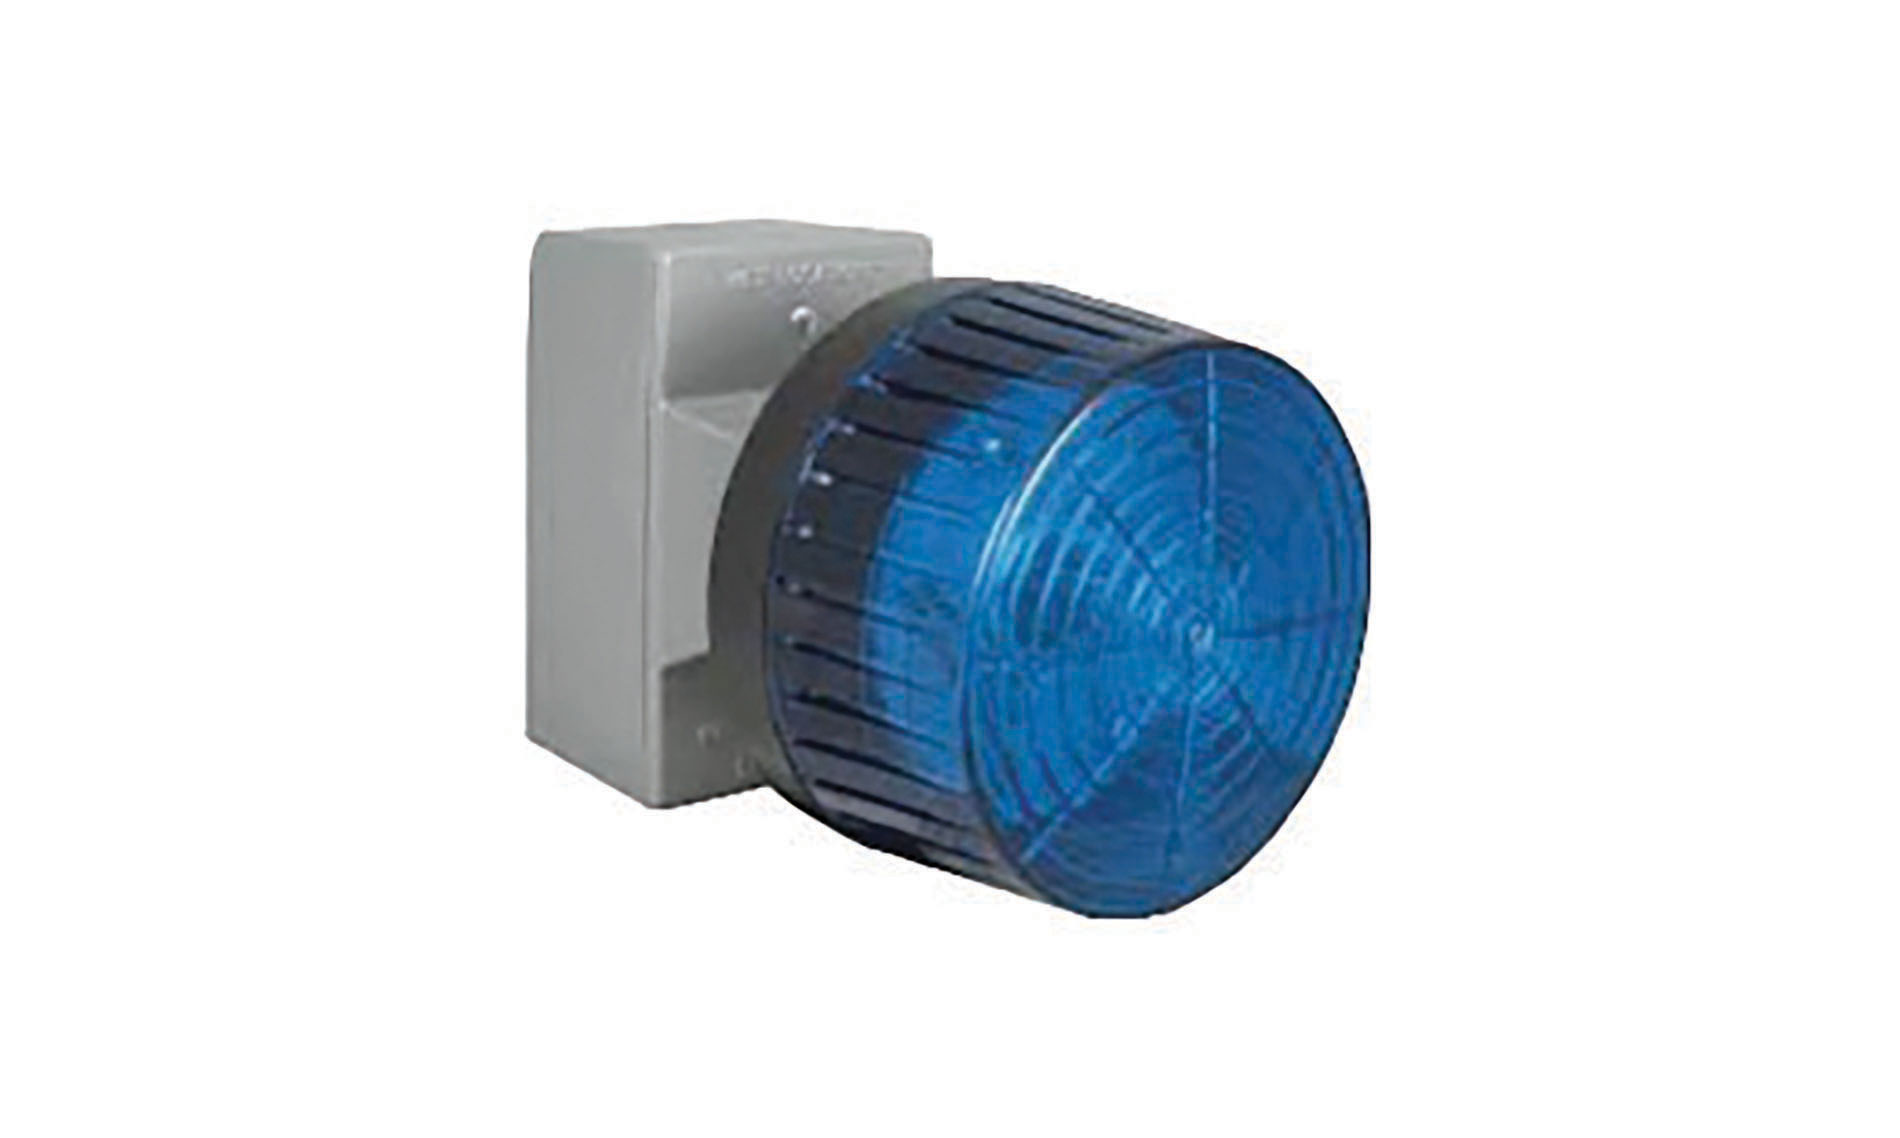 Blue strobe light. Image by Viking Electronics.